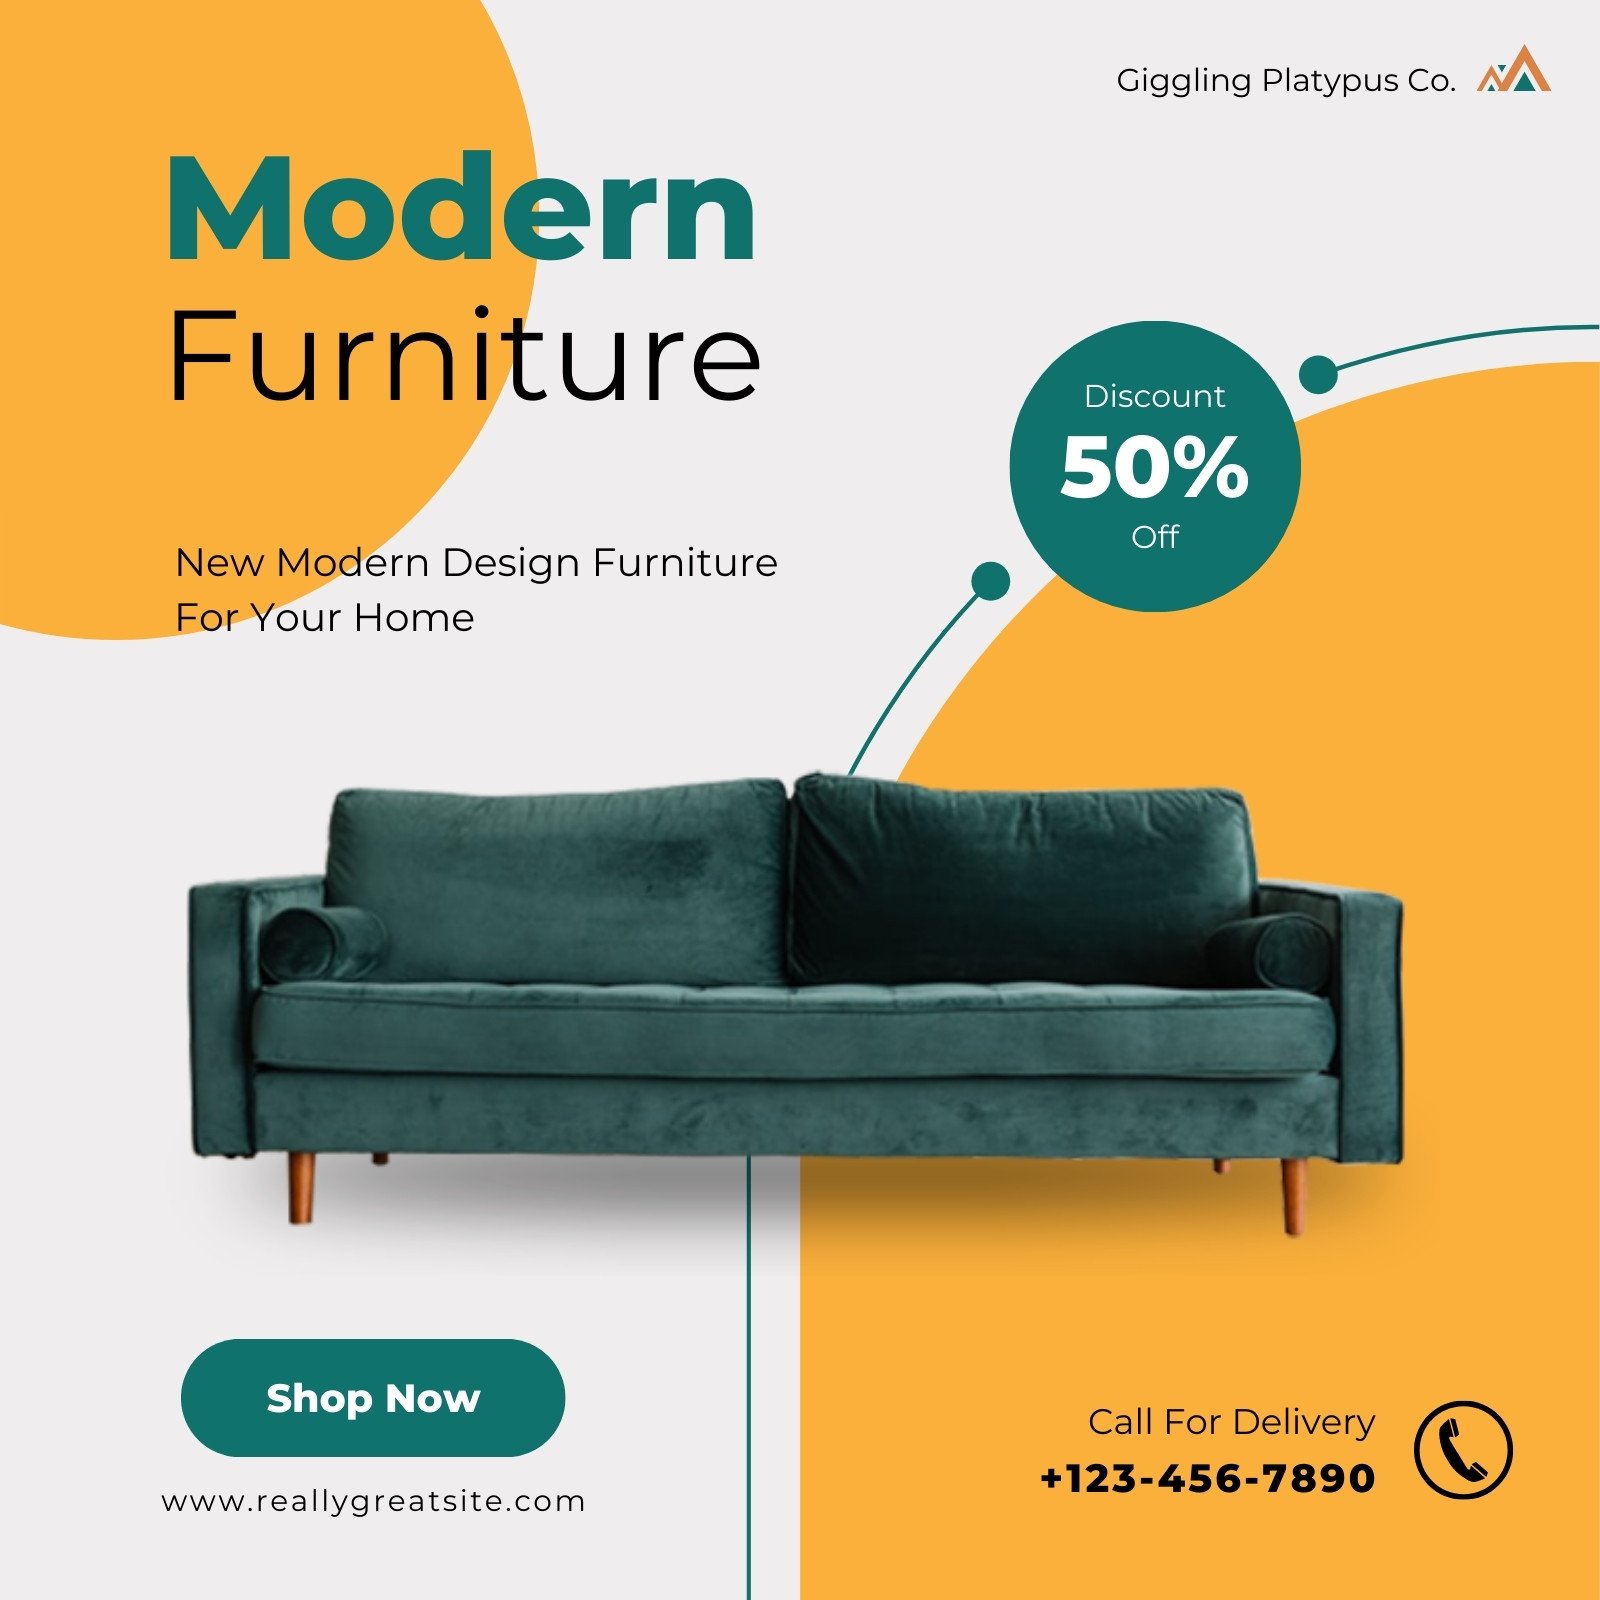 Free furniture sample trends